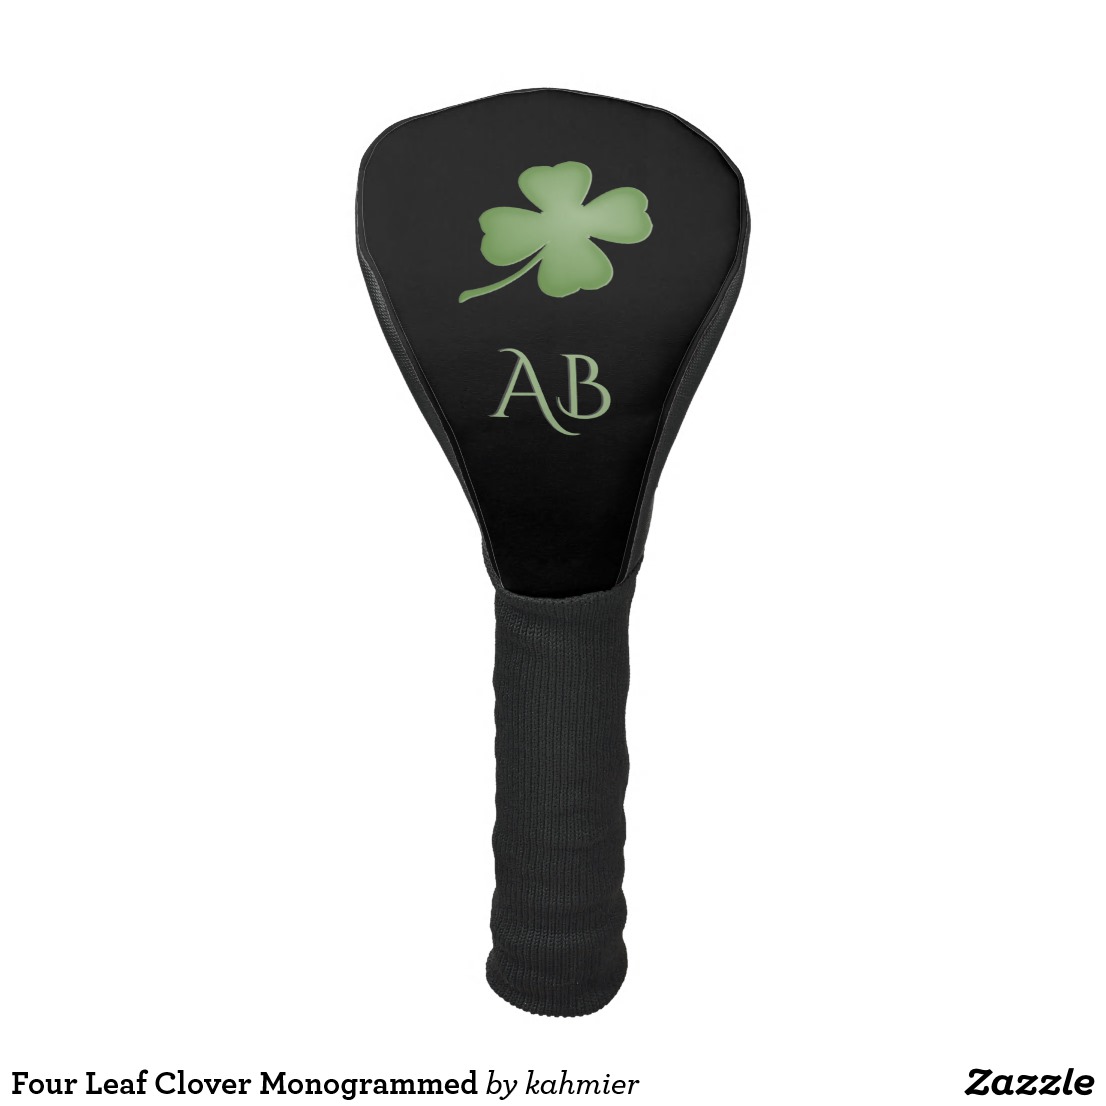 Four Leaf Clover Monogrammed Golf Head Cover